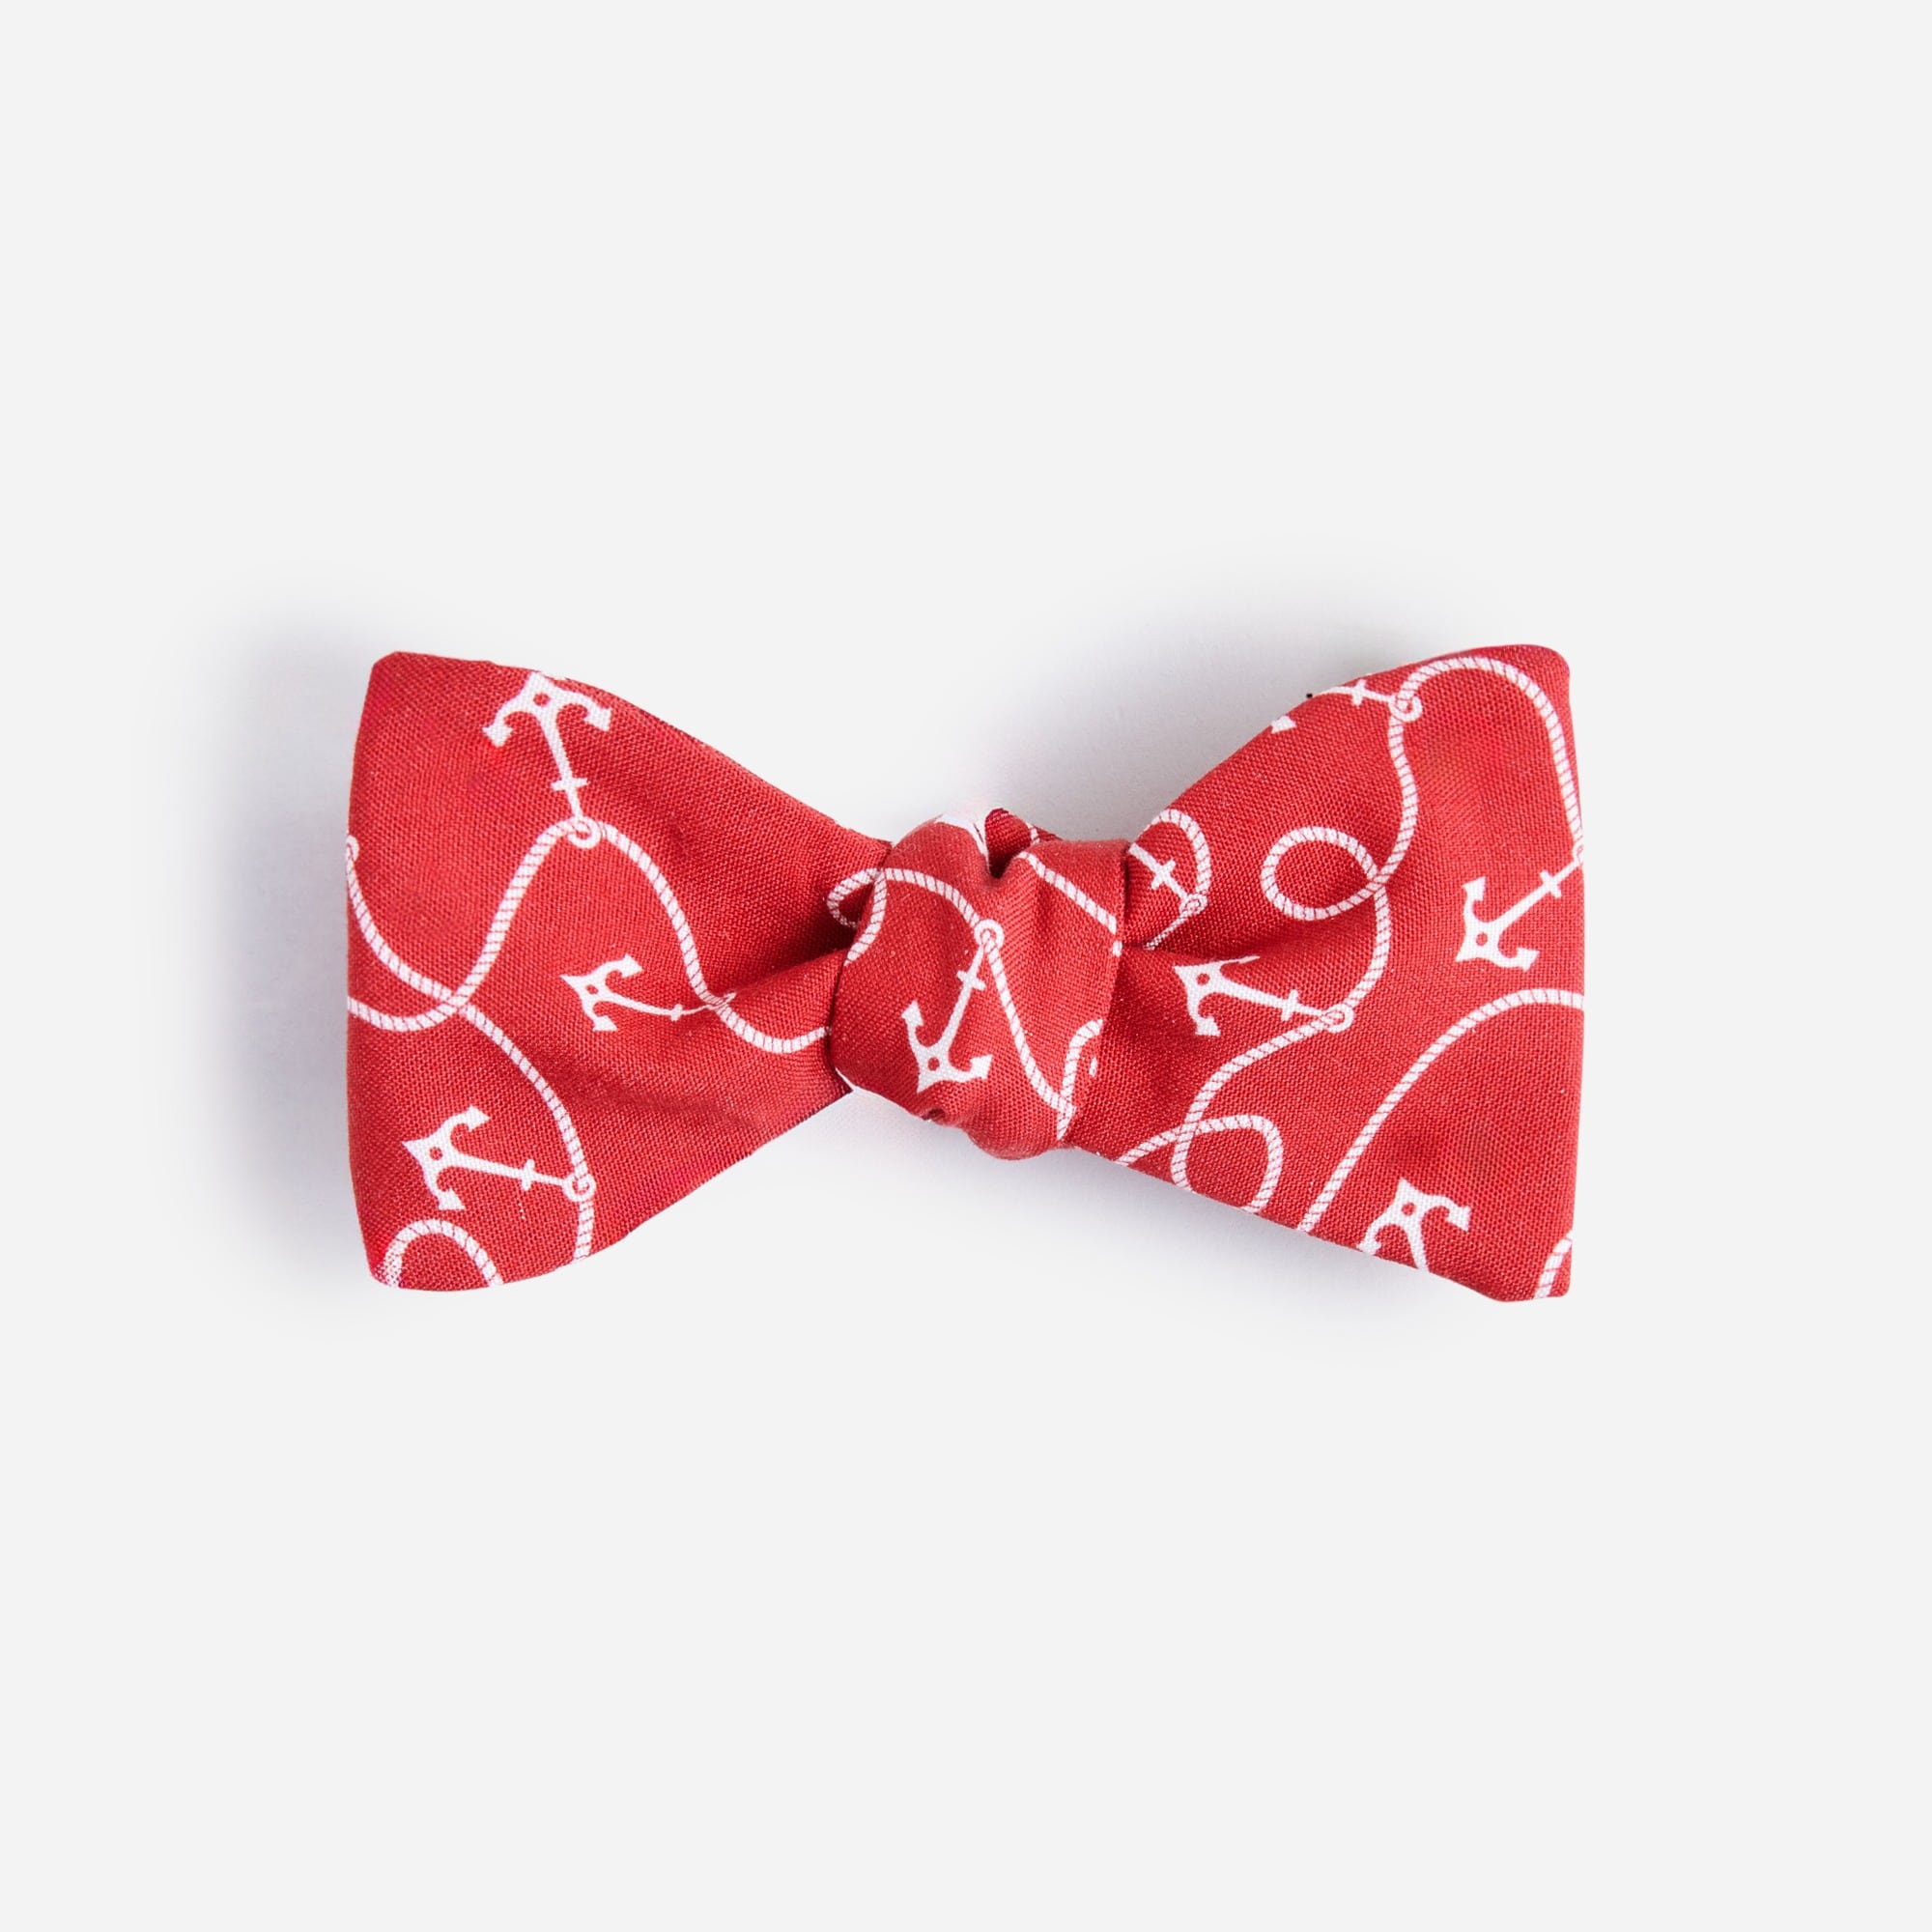  Silk bow tie in anchor print